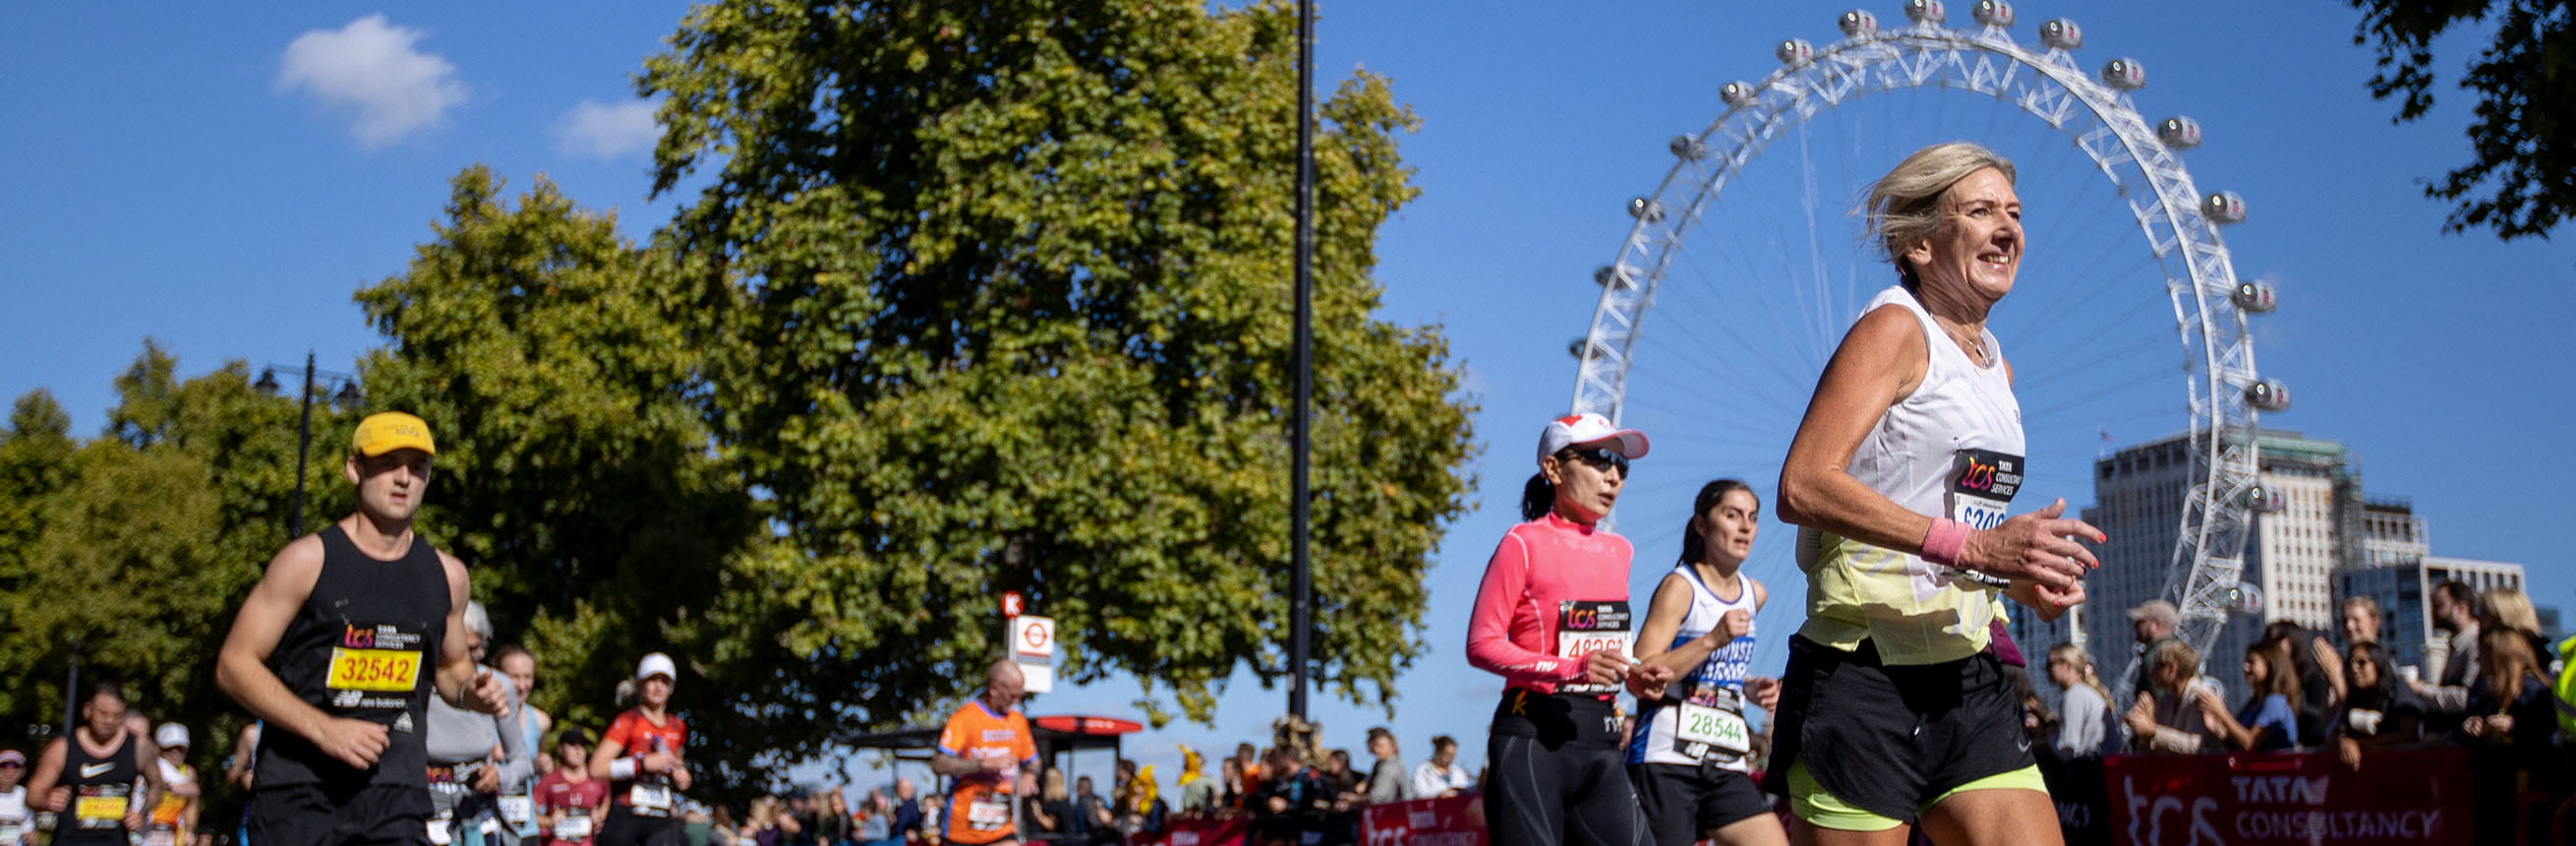 Runners on Embankment at the TCS London Marathon